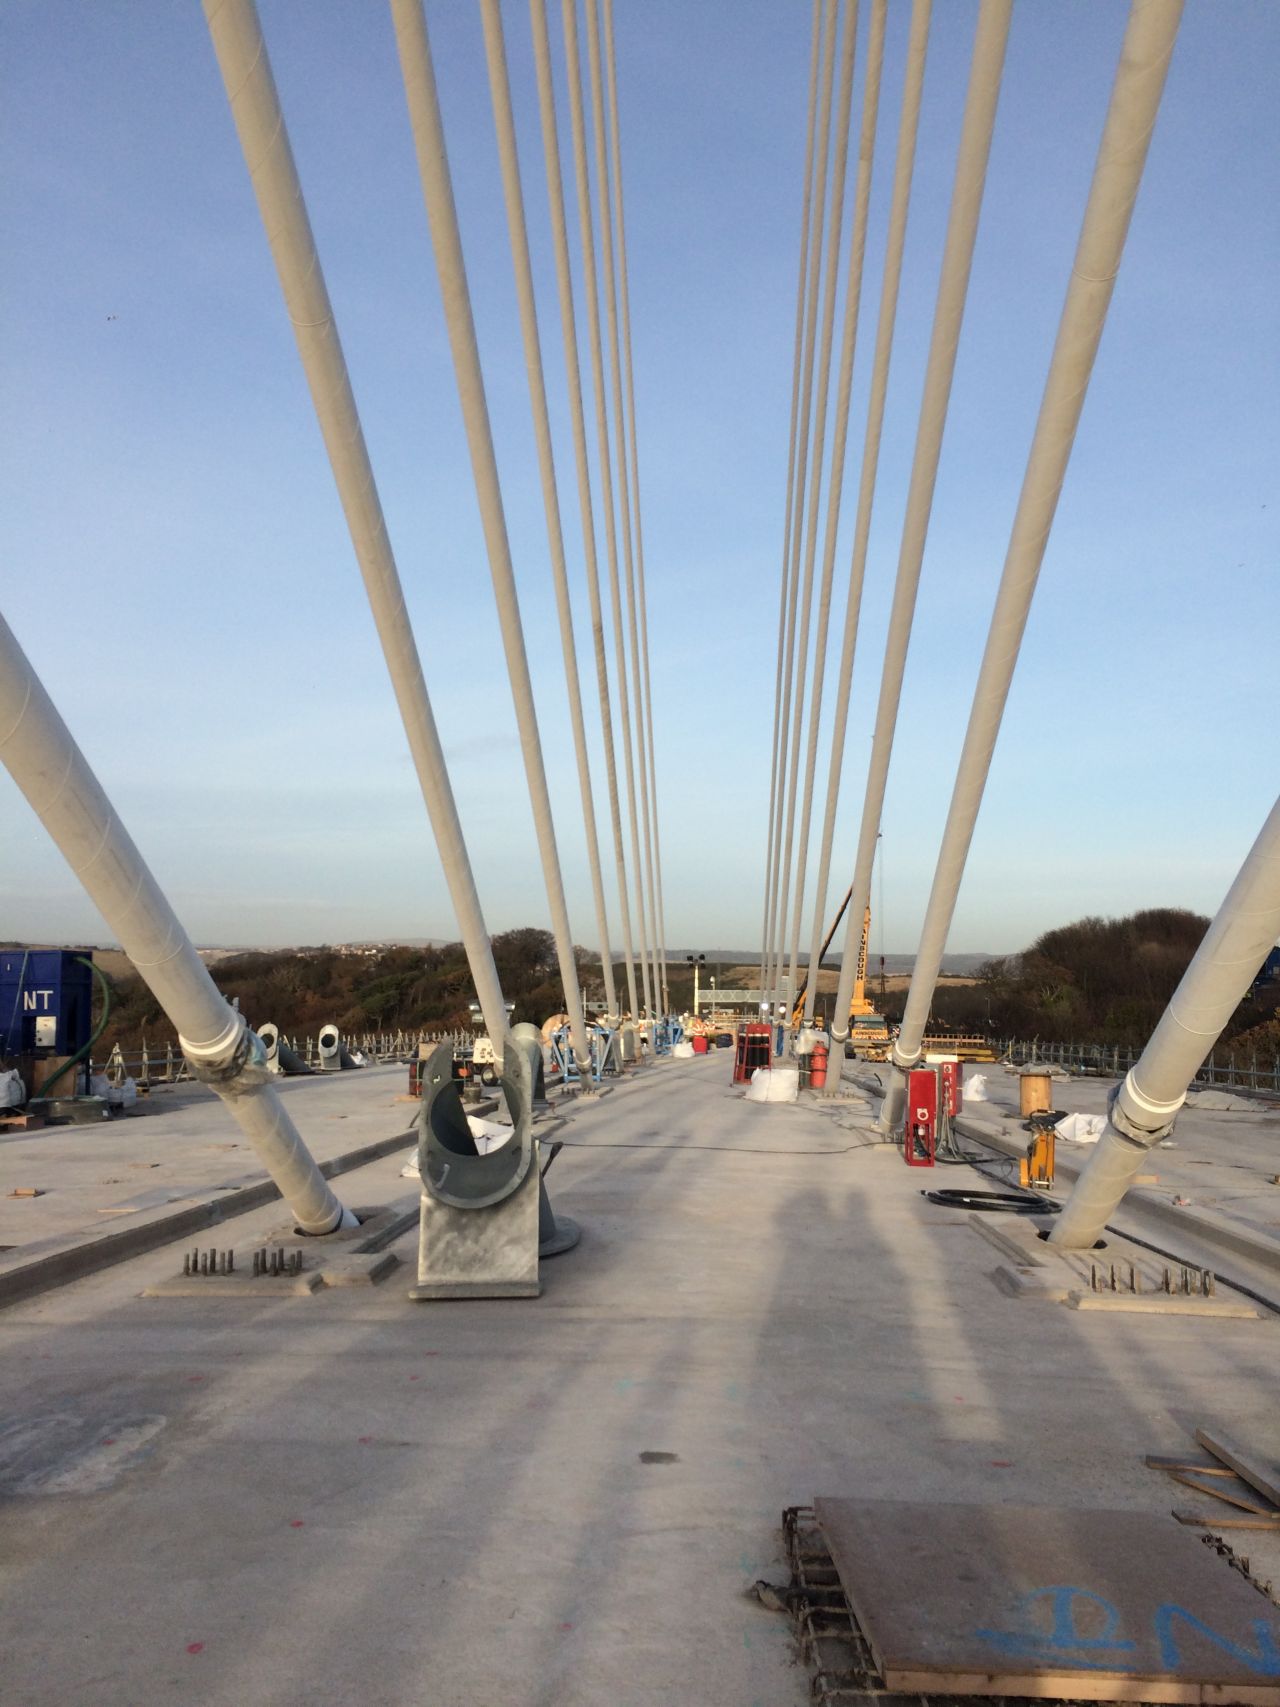 Construction repair works on Queensferry Crossing road bridge in Scotland